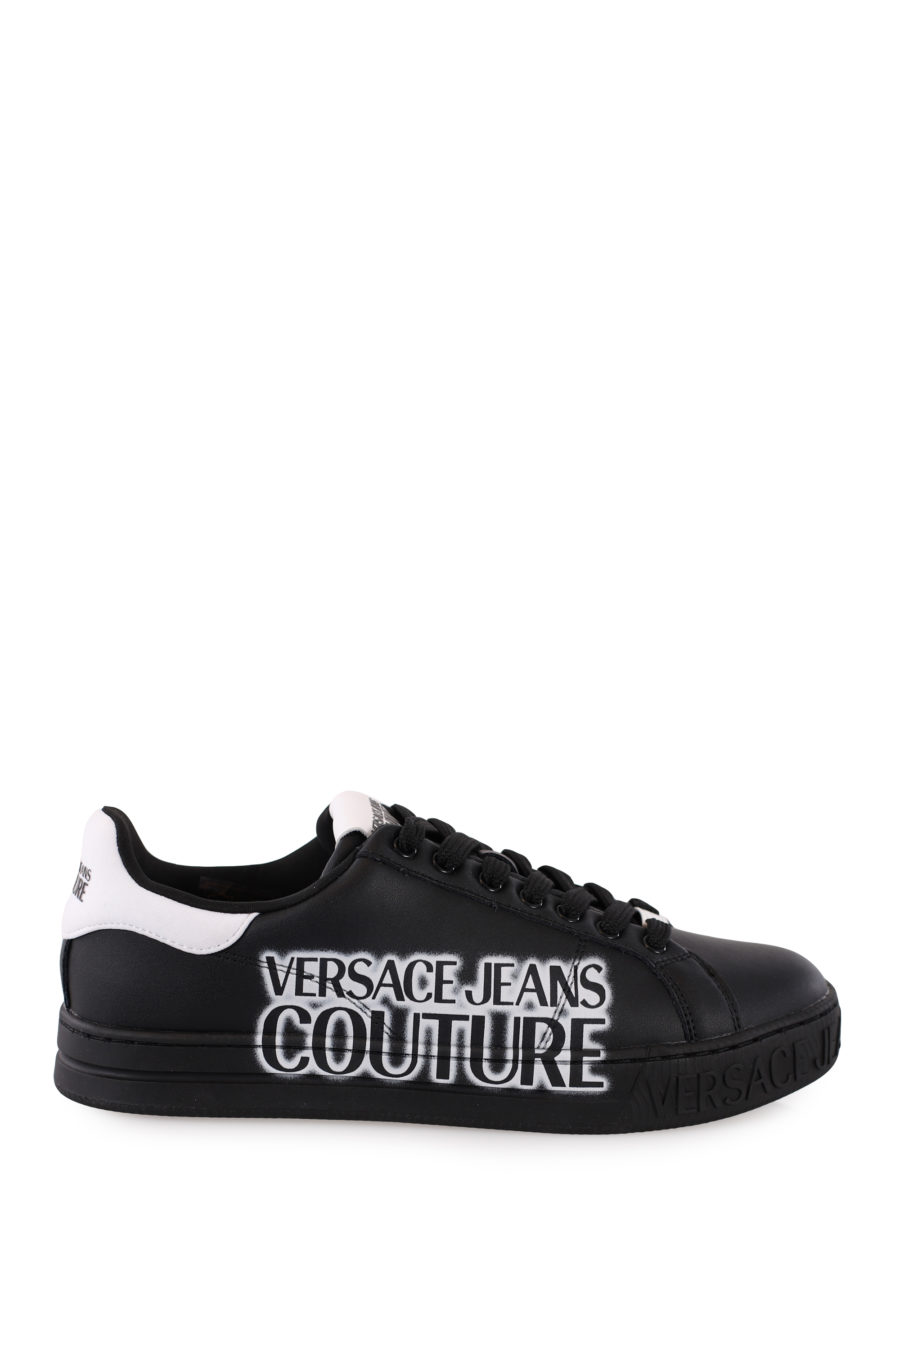 Zapatillas negras "Court 88" con logotipo blanco - IMG 9063